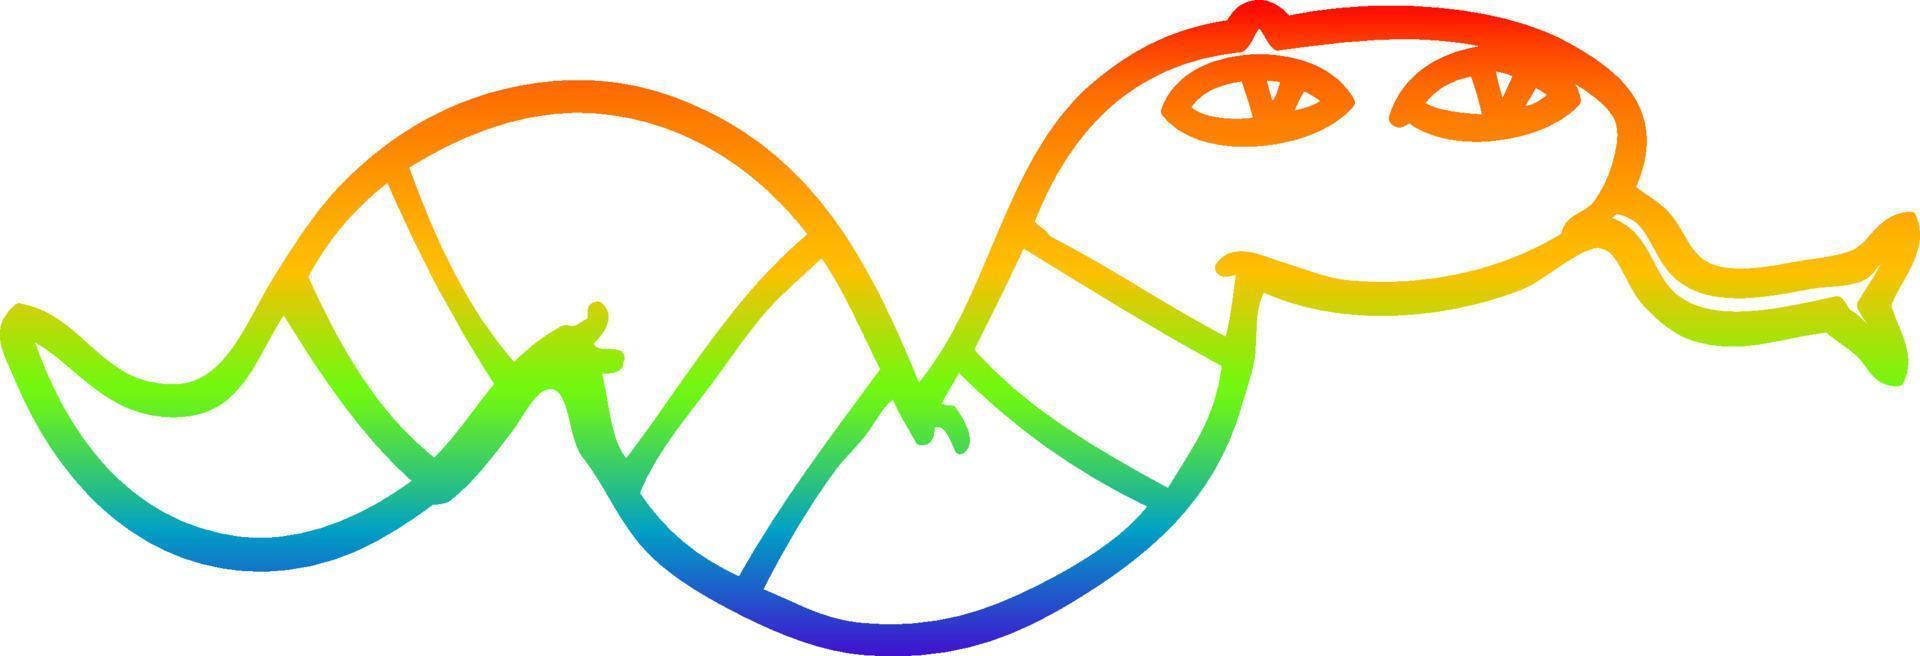 rainbow gradient line drawing cartoon snake vector